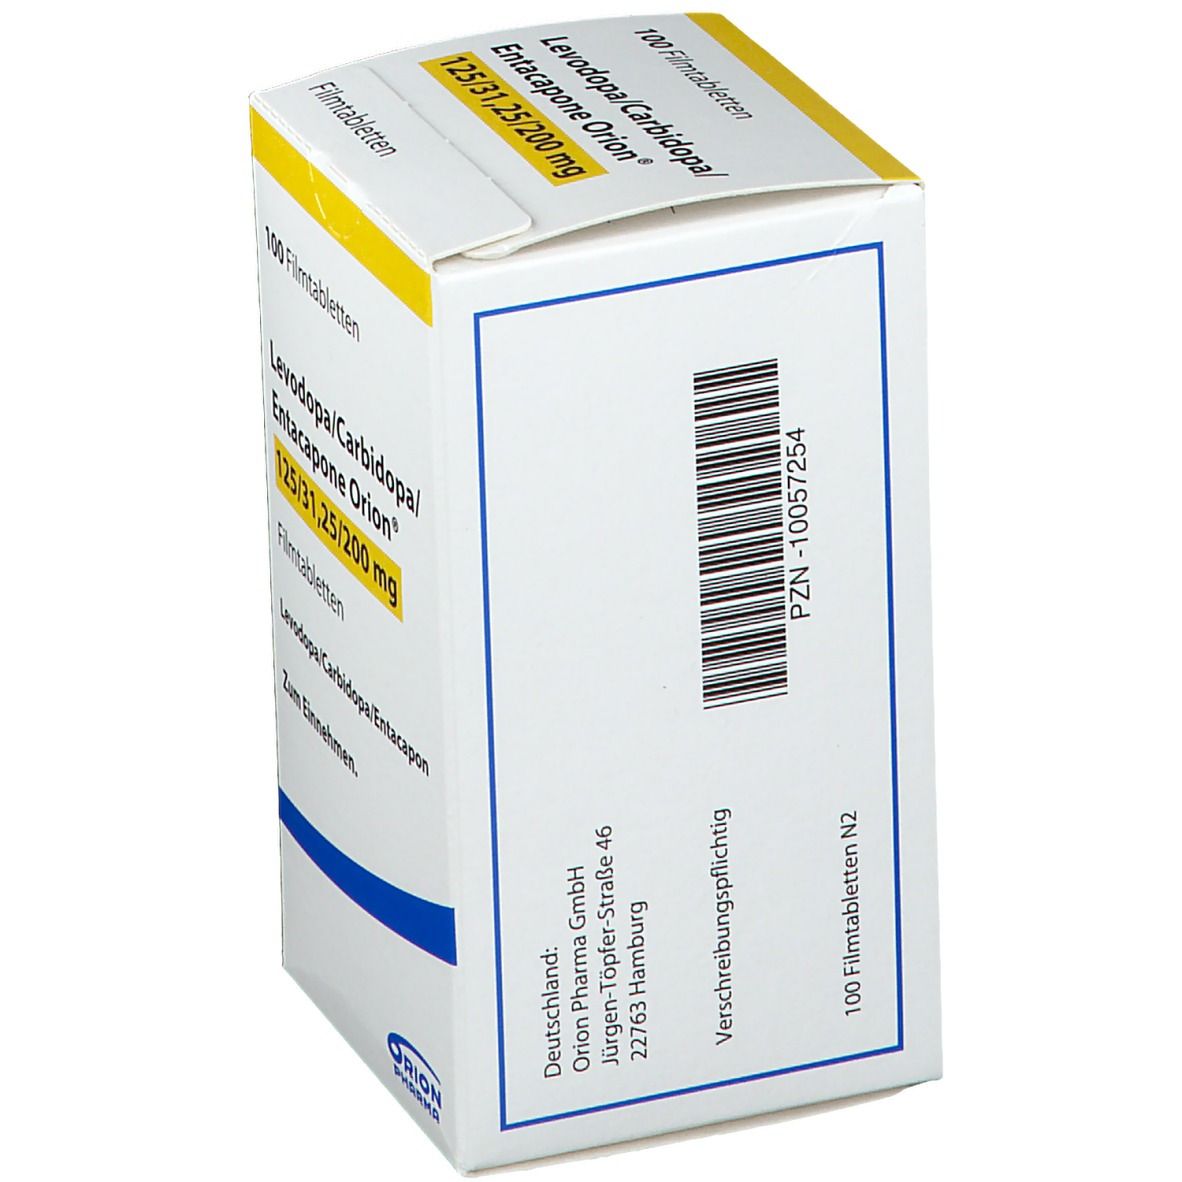 Levodopa/Carbidopa/Entacapone Orion® 125 mg/31,25 mg/200 mg